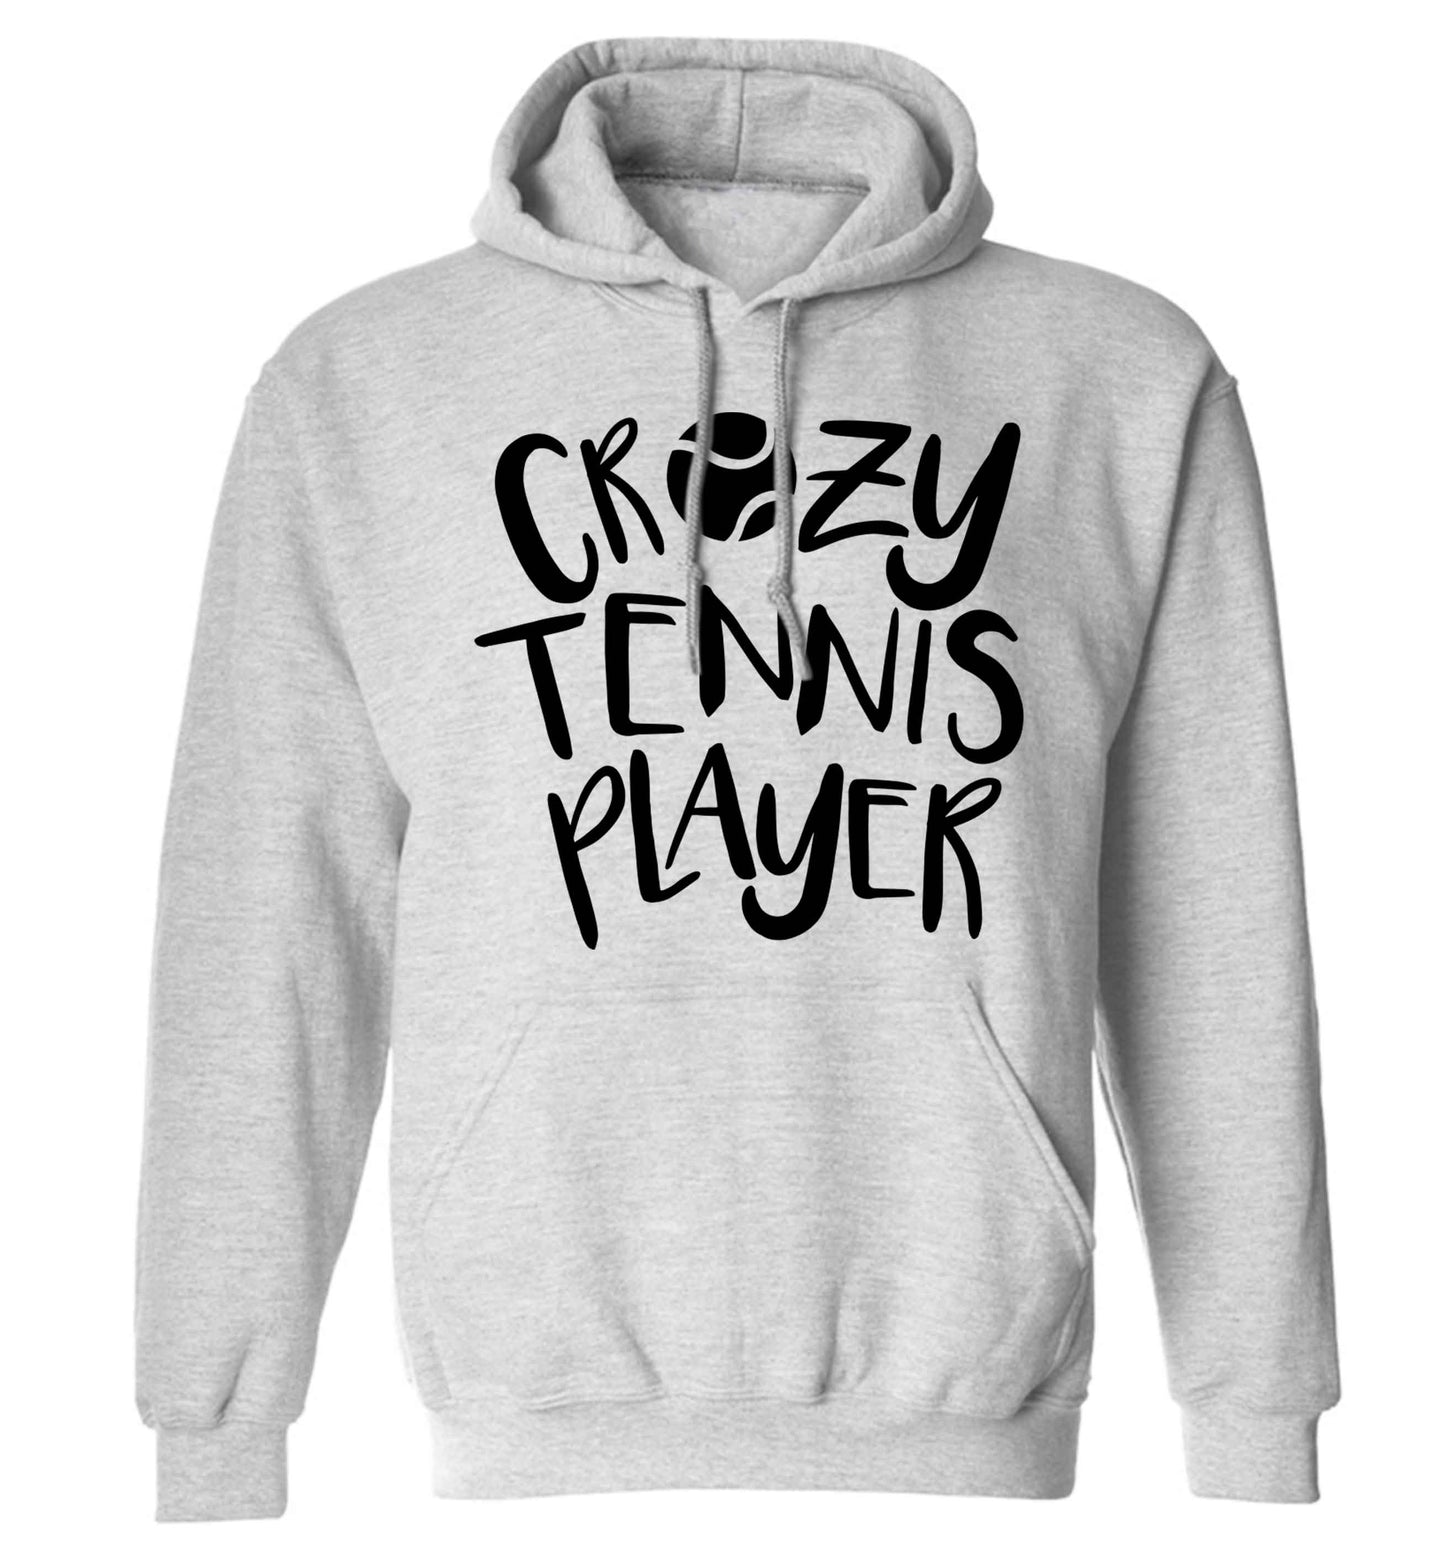 Crazy tennis player adults unisex grey hoodie 2XL